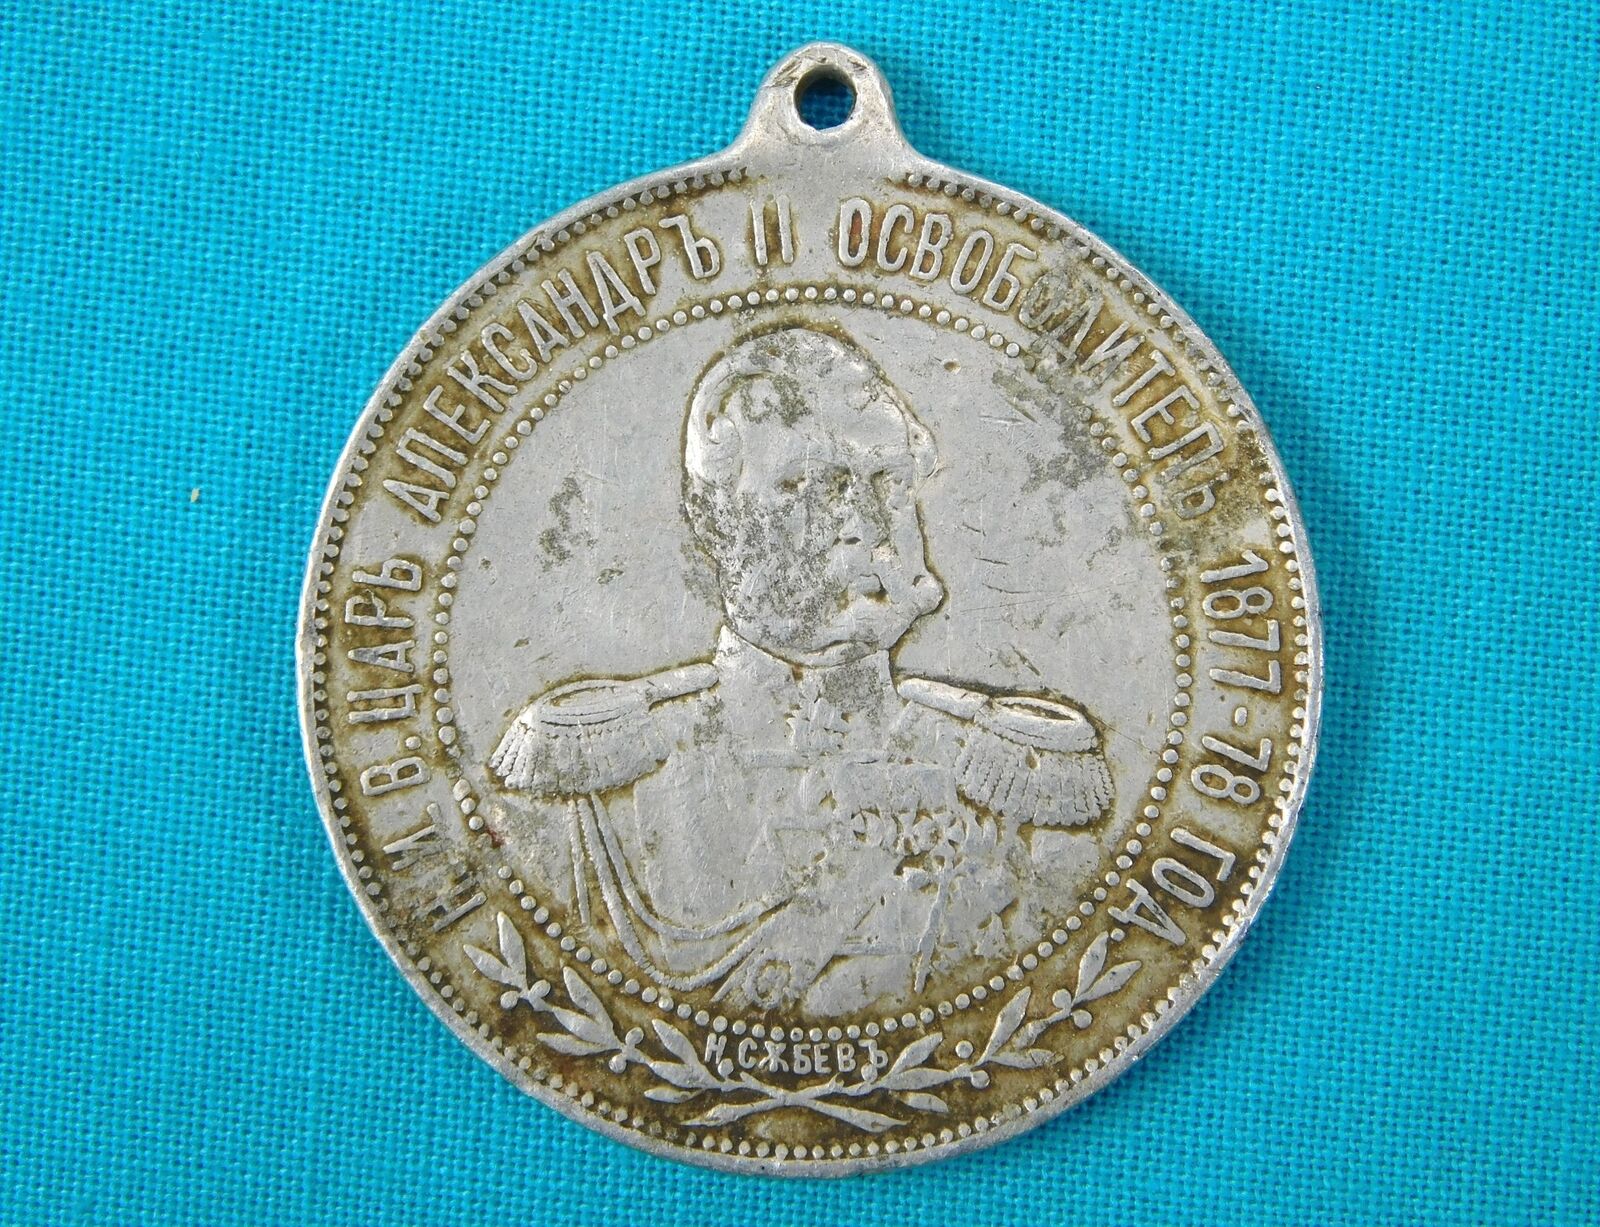 Antique 1902 Imperial Russian Bulgarian Alexander II Commemorative Jeton Badge